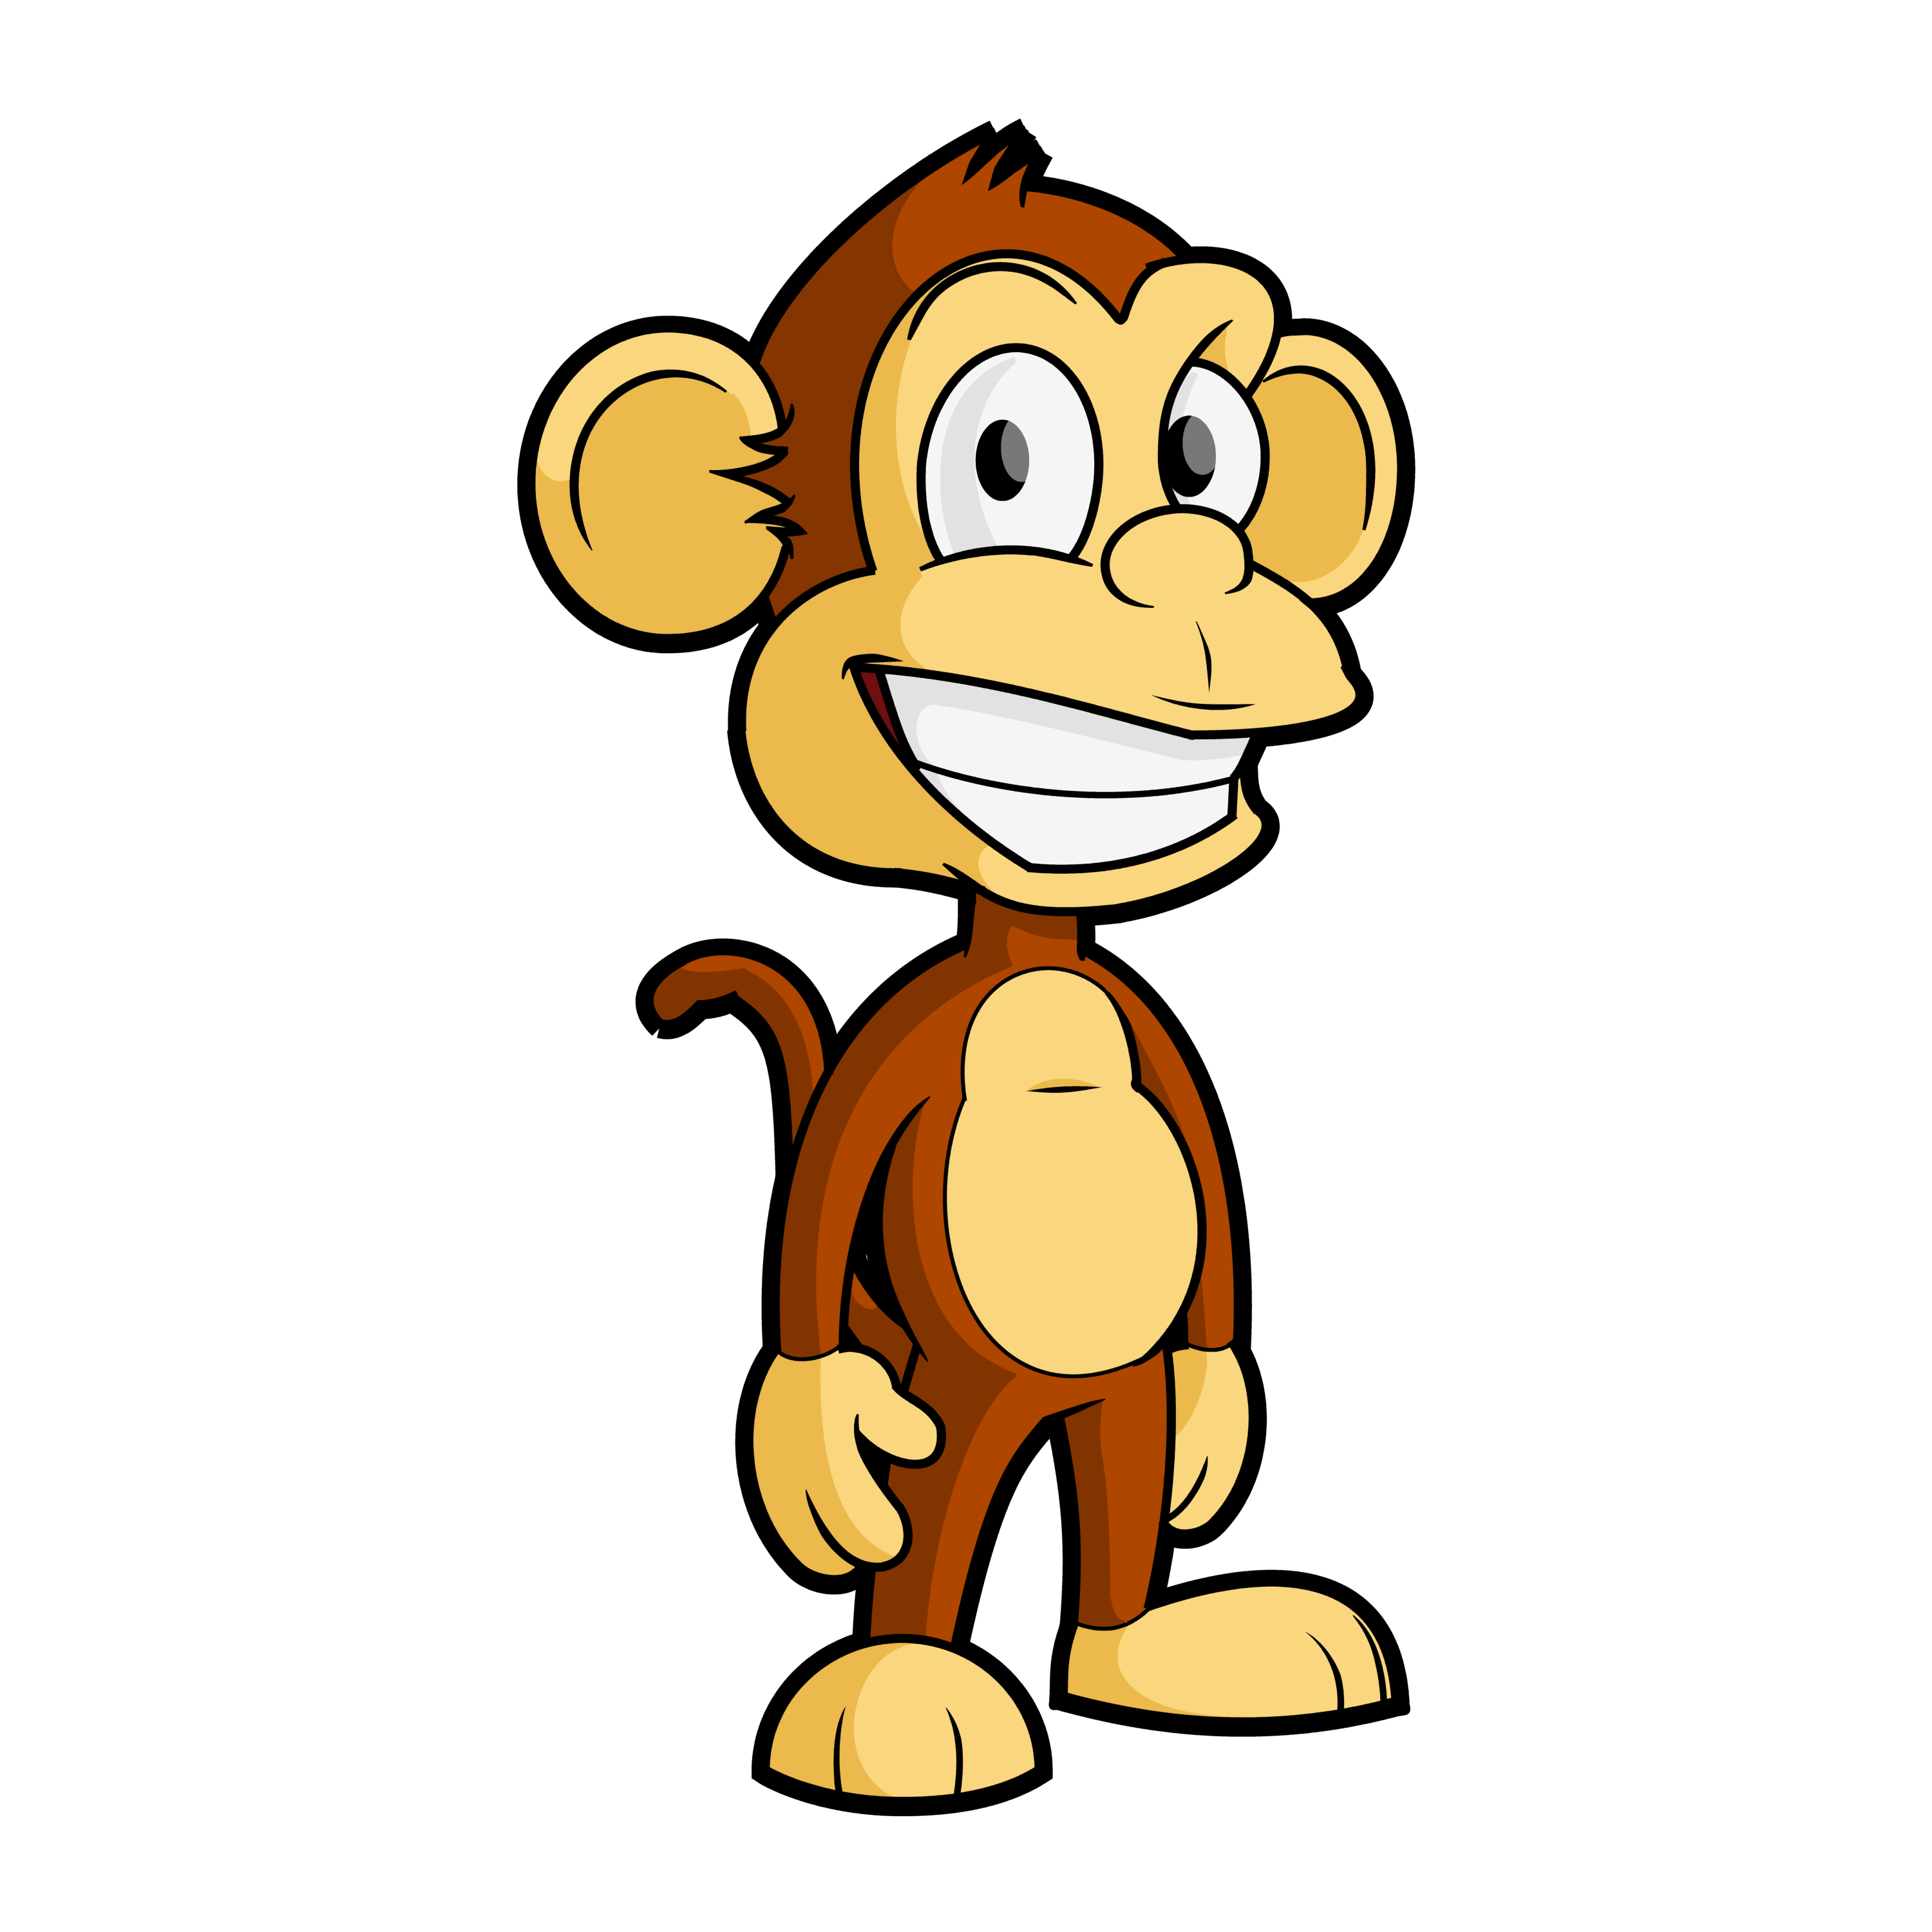 Clip art of cartoon monkeys - Clipartix